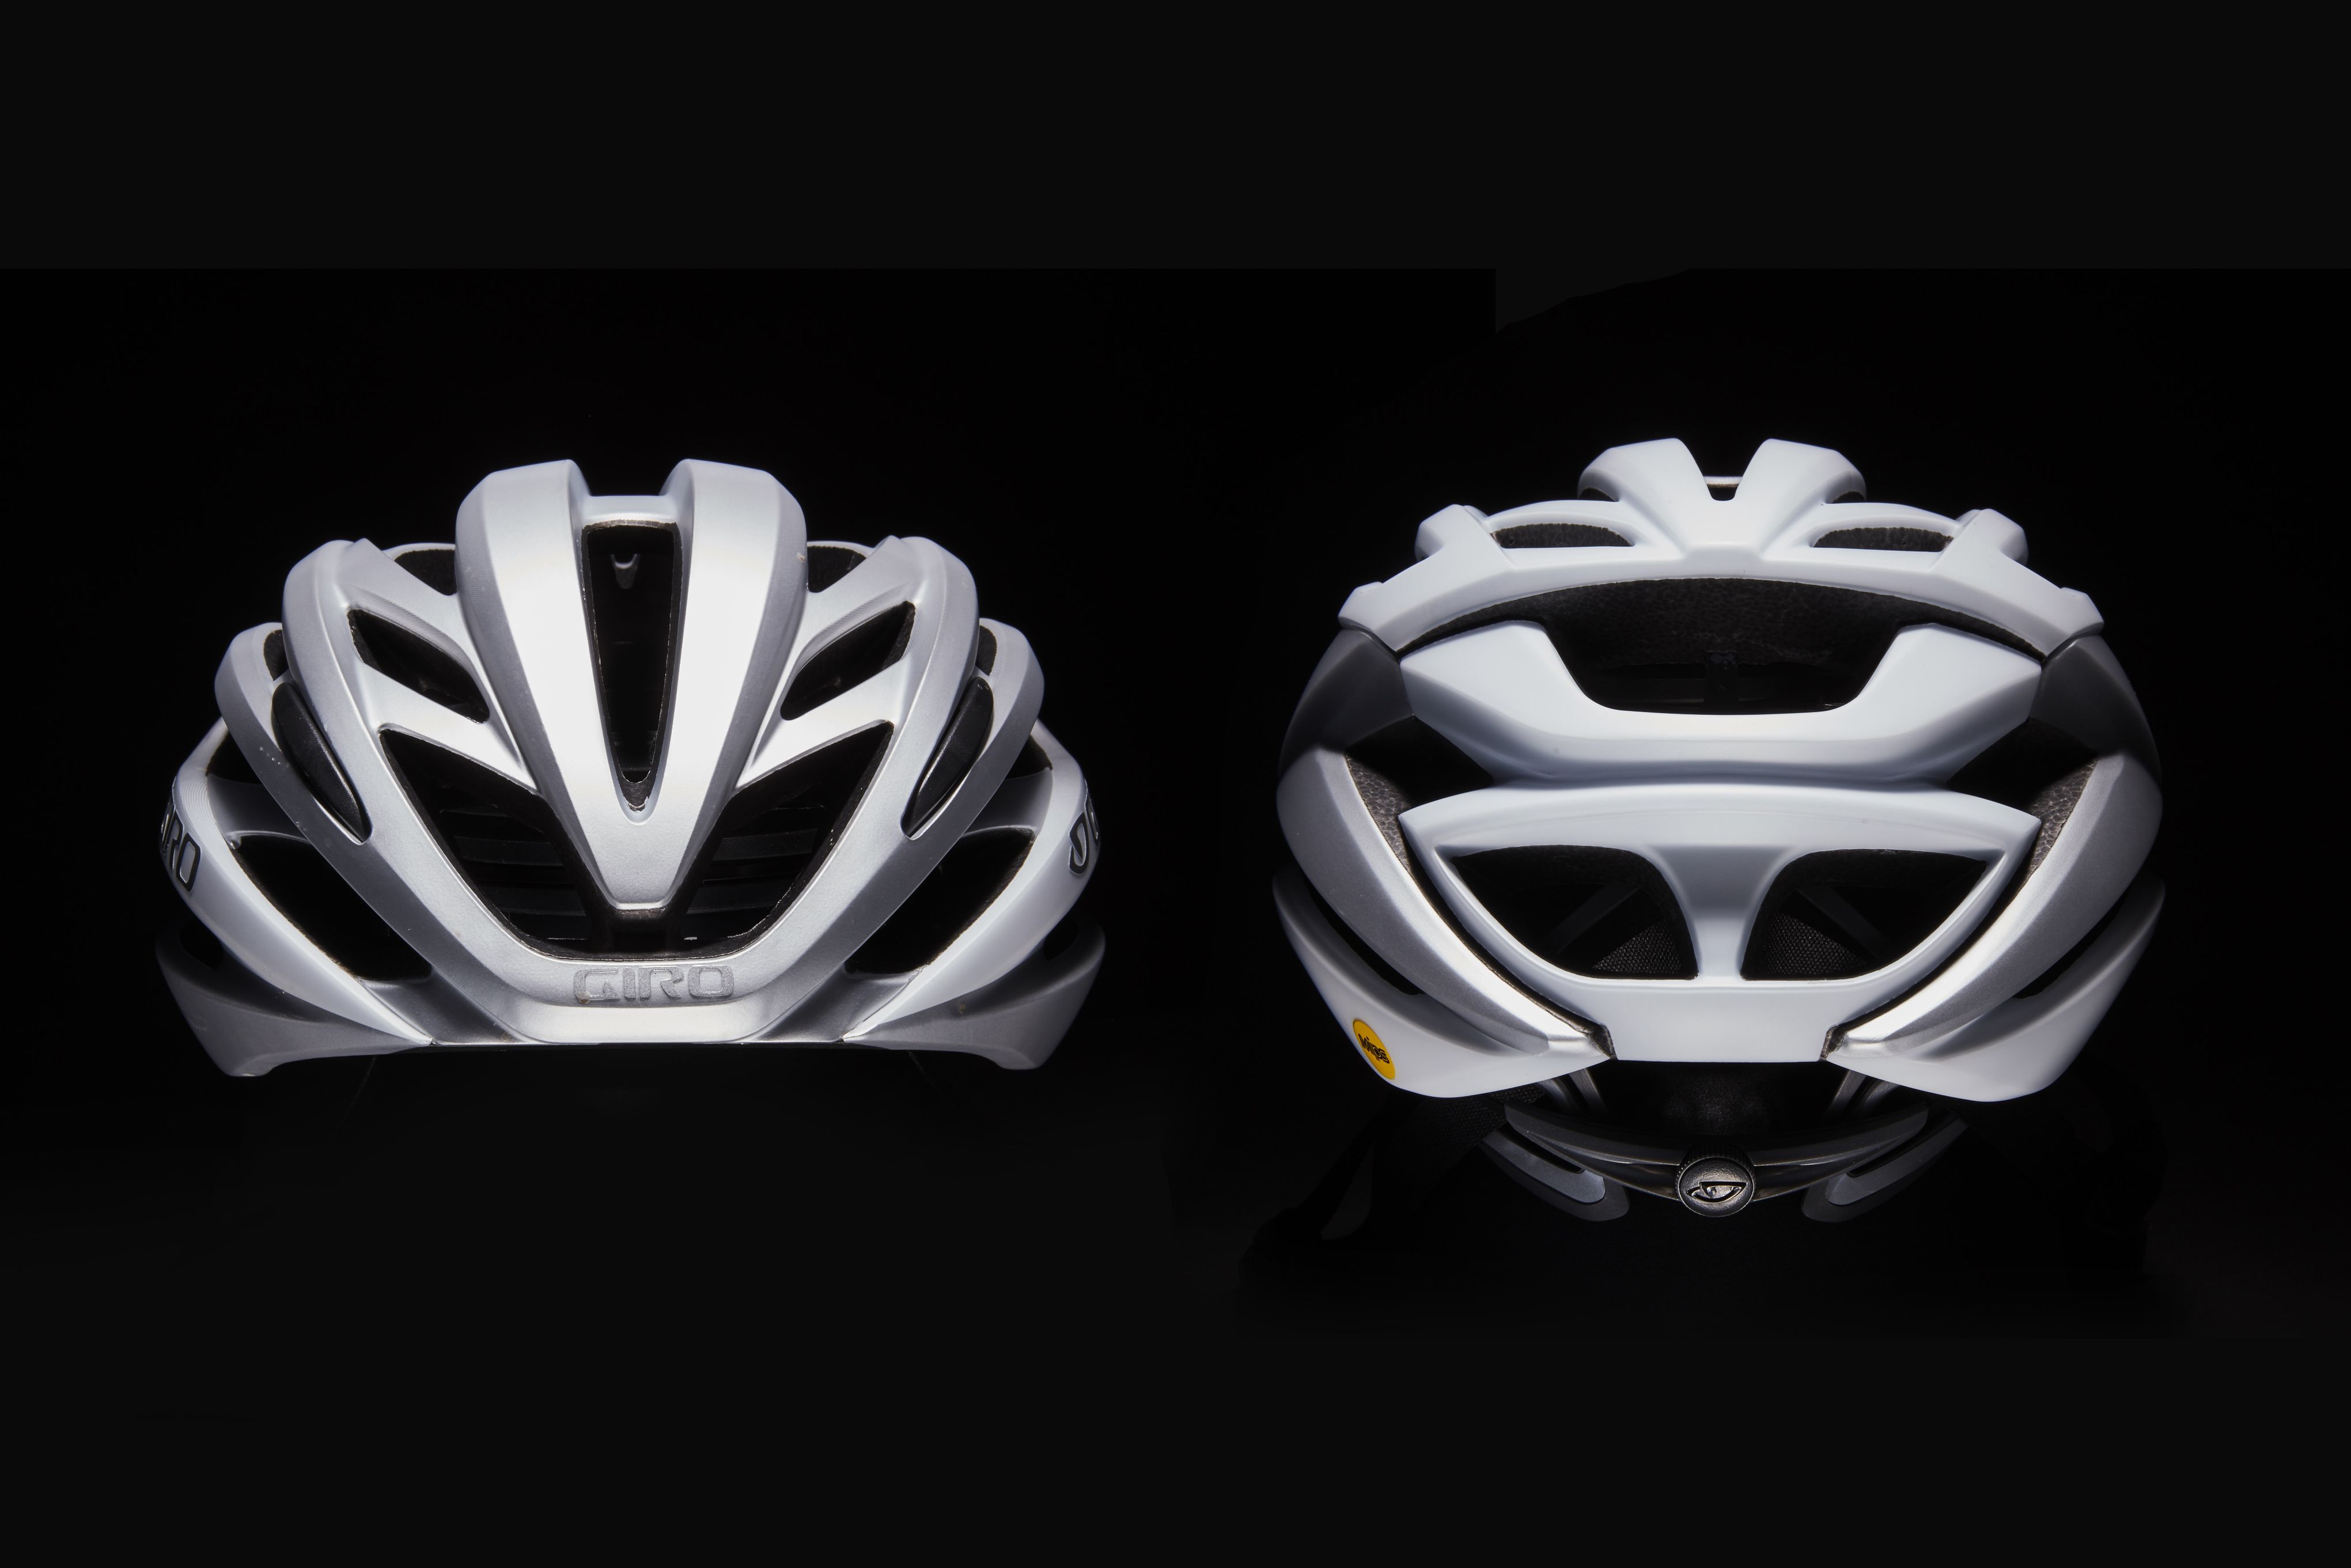 giro syntax road helmet 2019